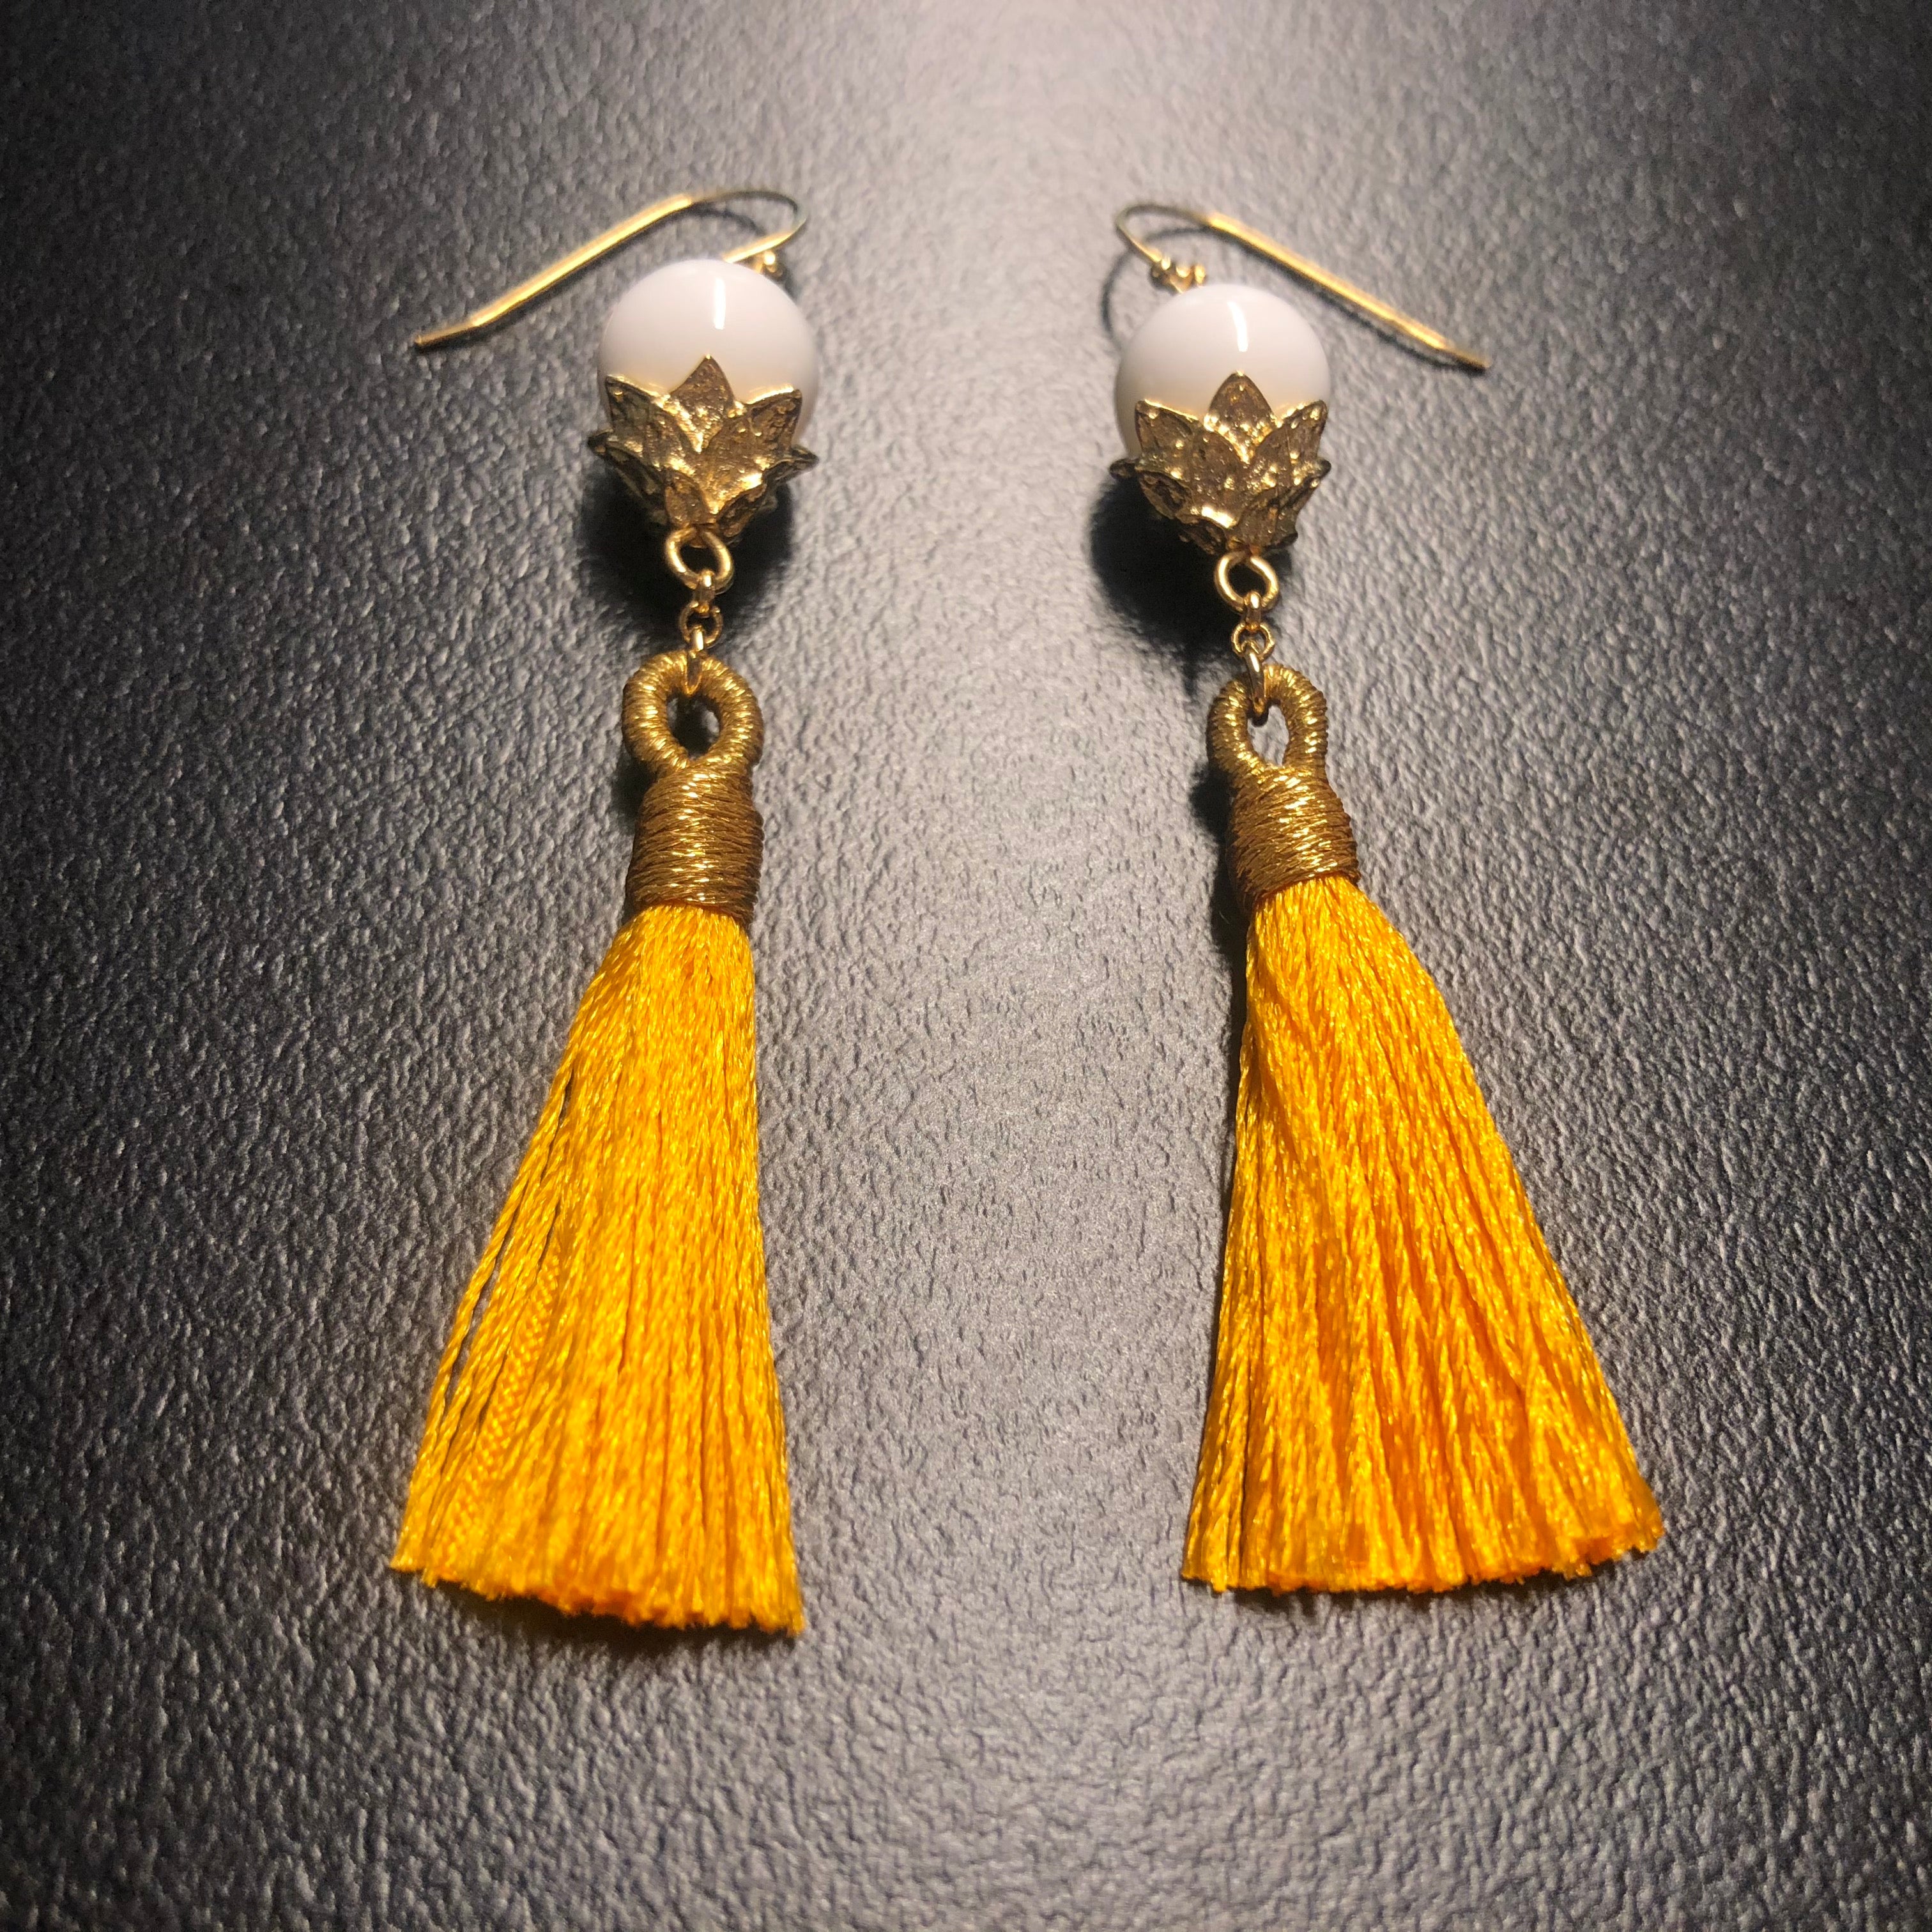 Buy Aradhya Designer Light Weight Yellow Bali Style Tassel Earrings for  Girls and Women | Globally